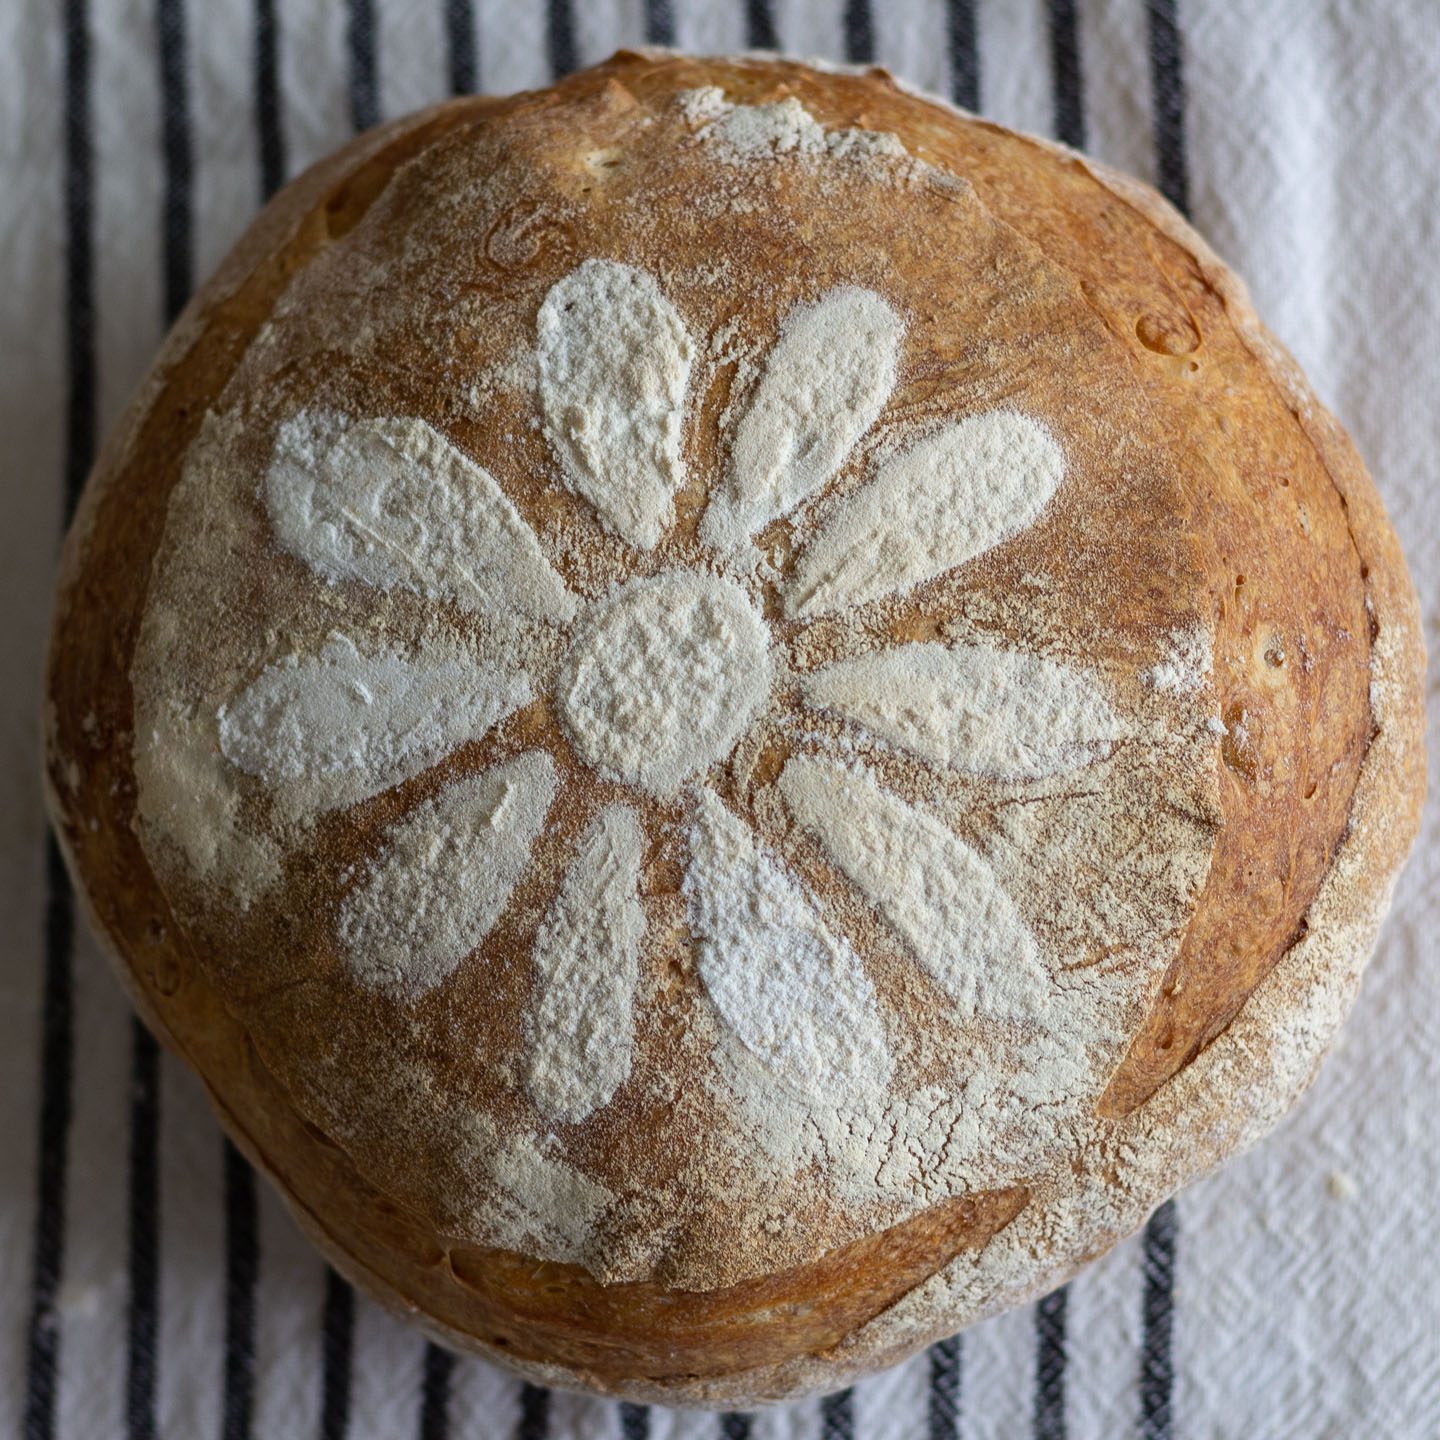 Artisan bread with stencil design